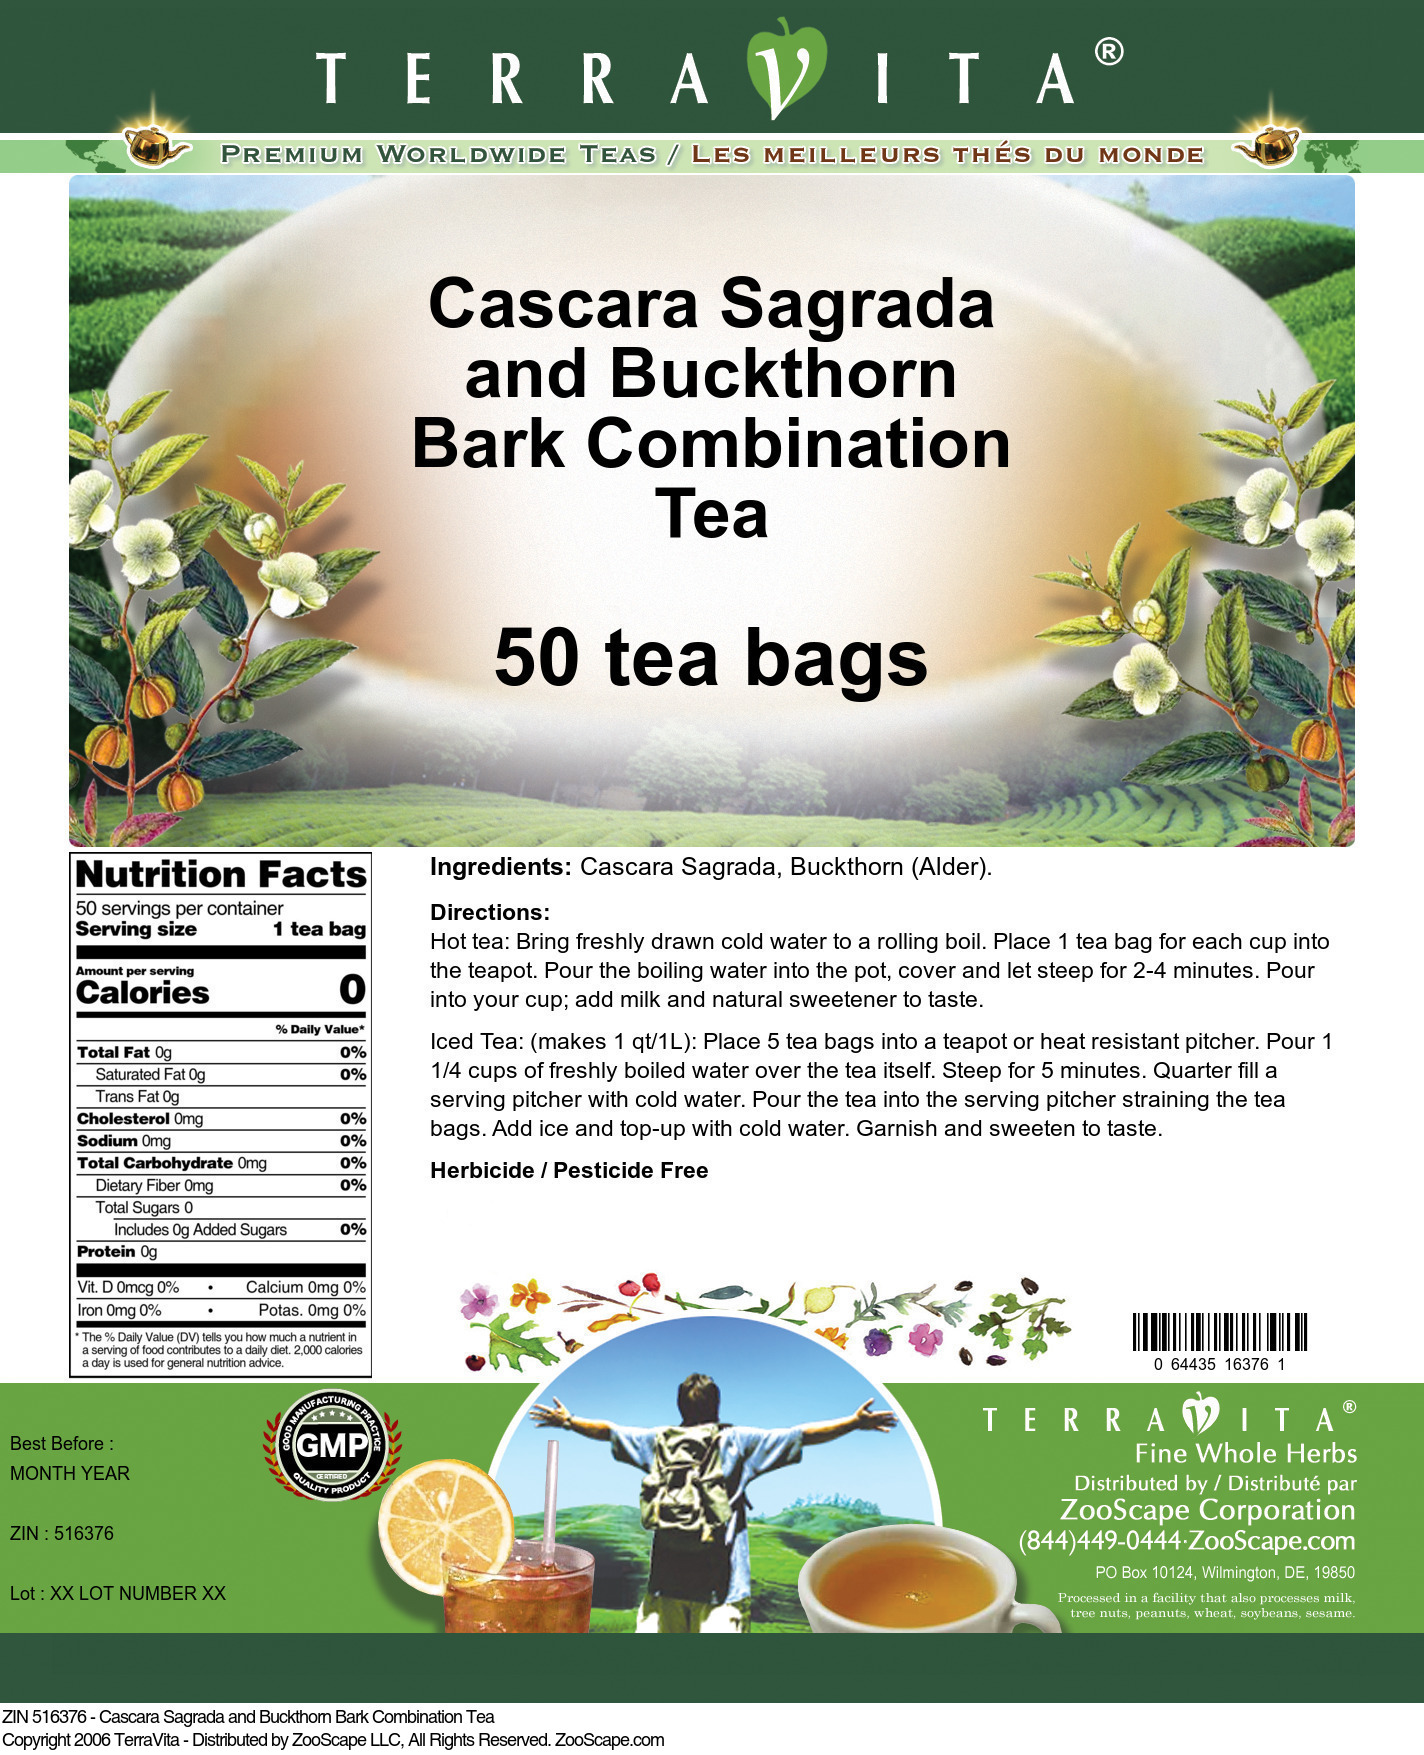 Cascara Sagrada and Buckthorn Bark Combination Tea - Label